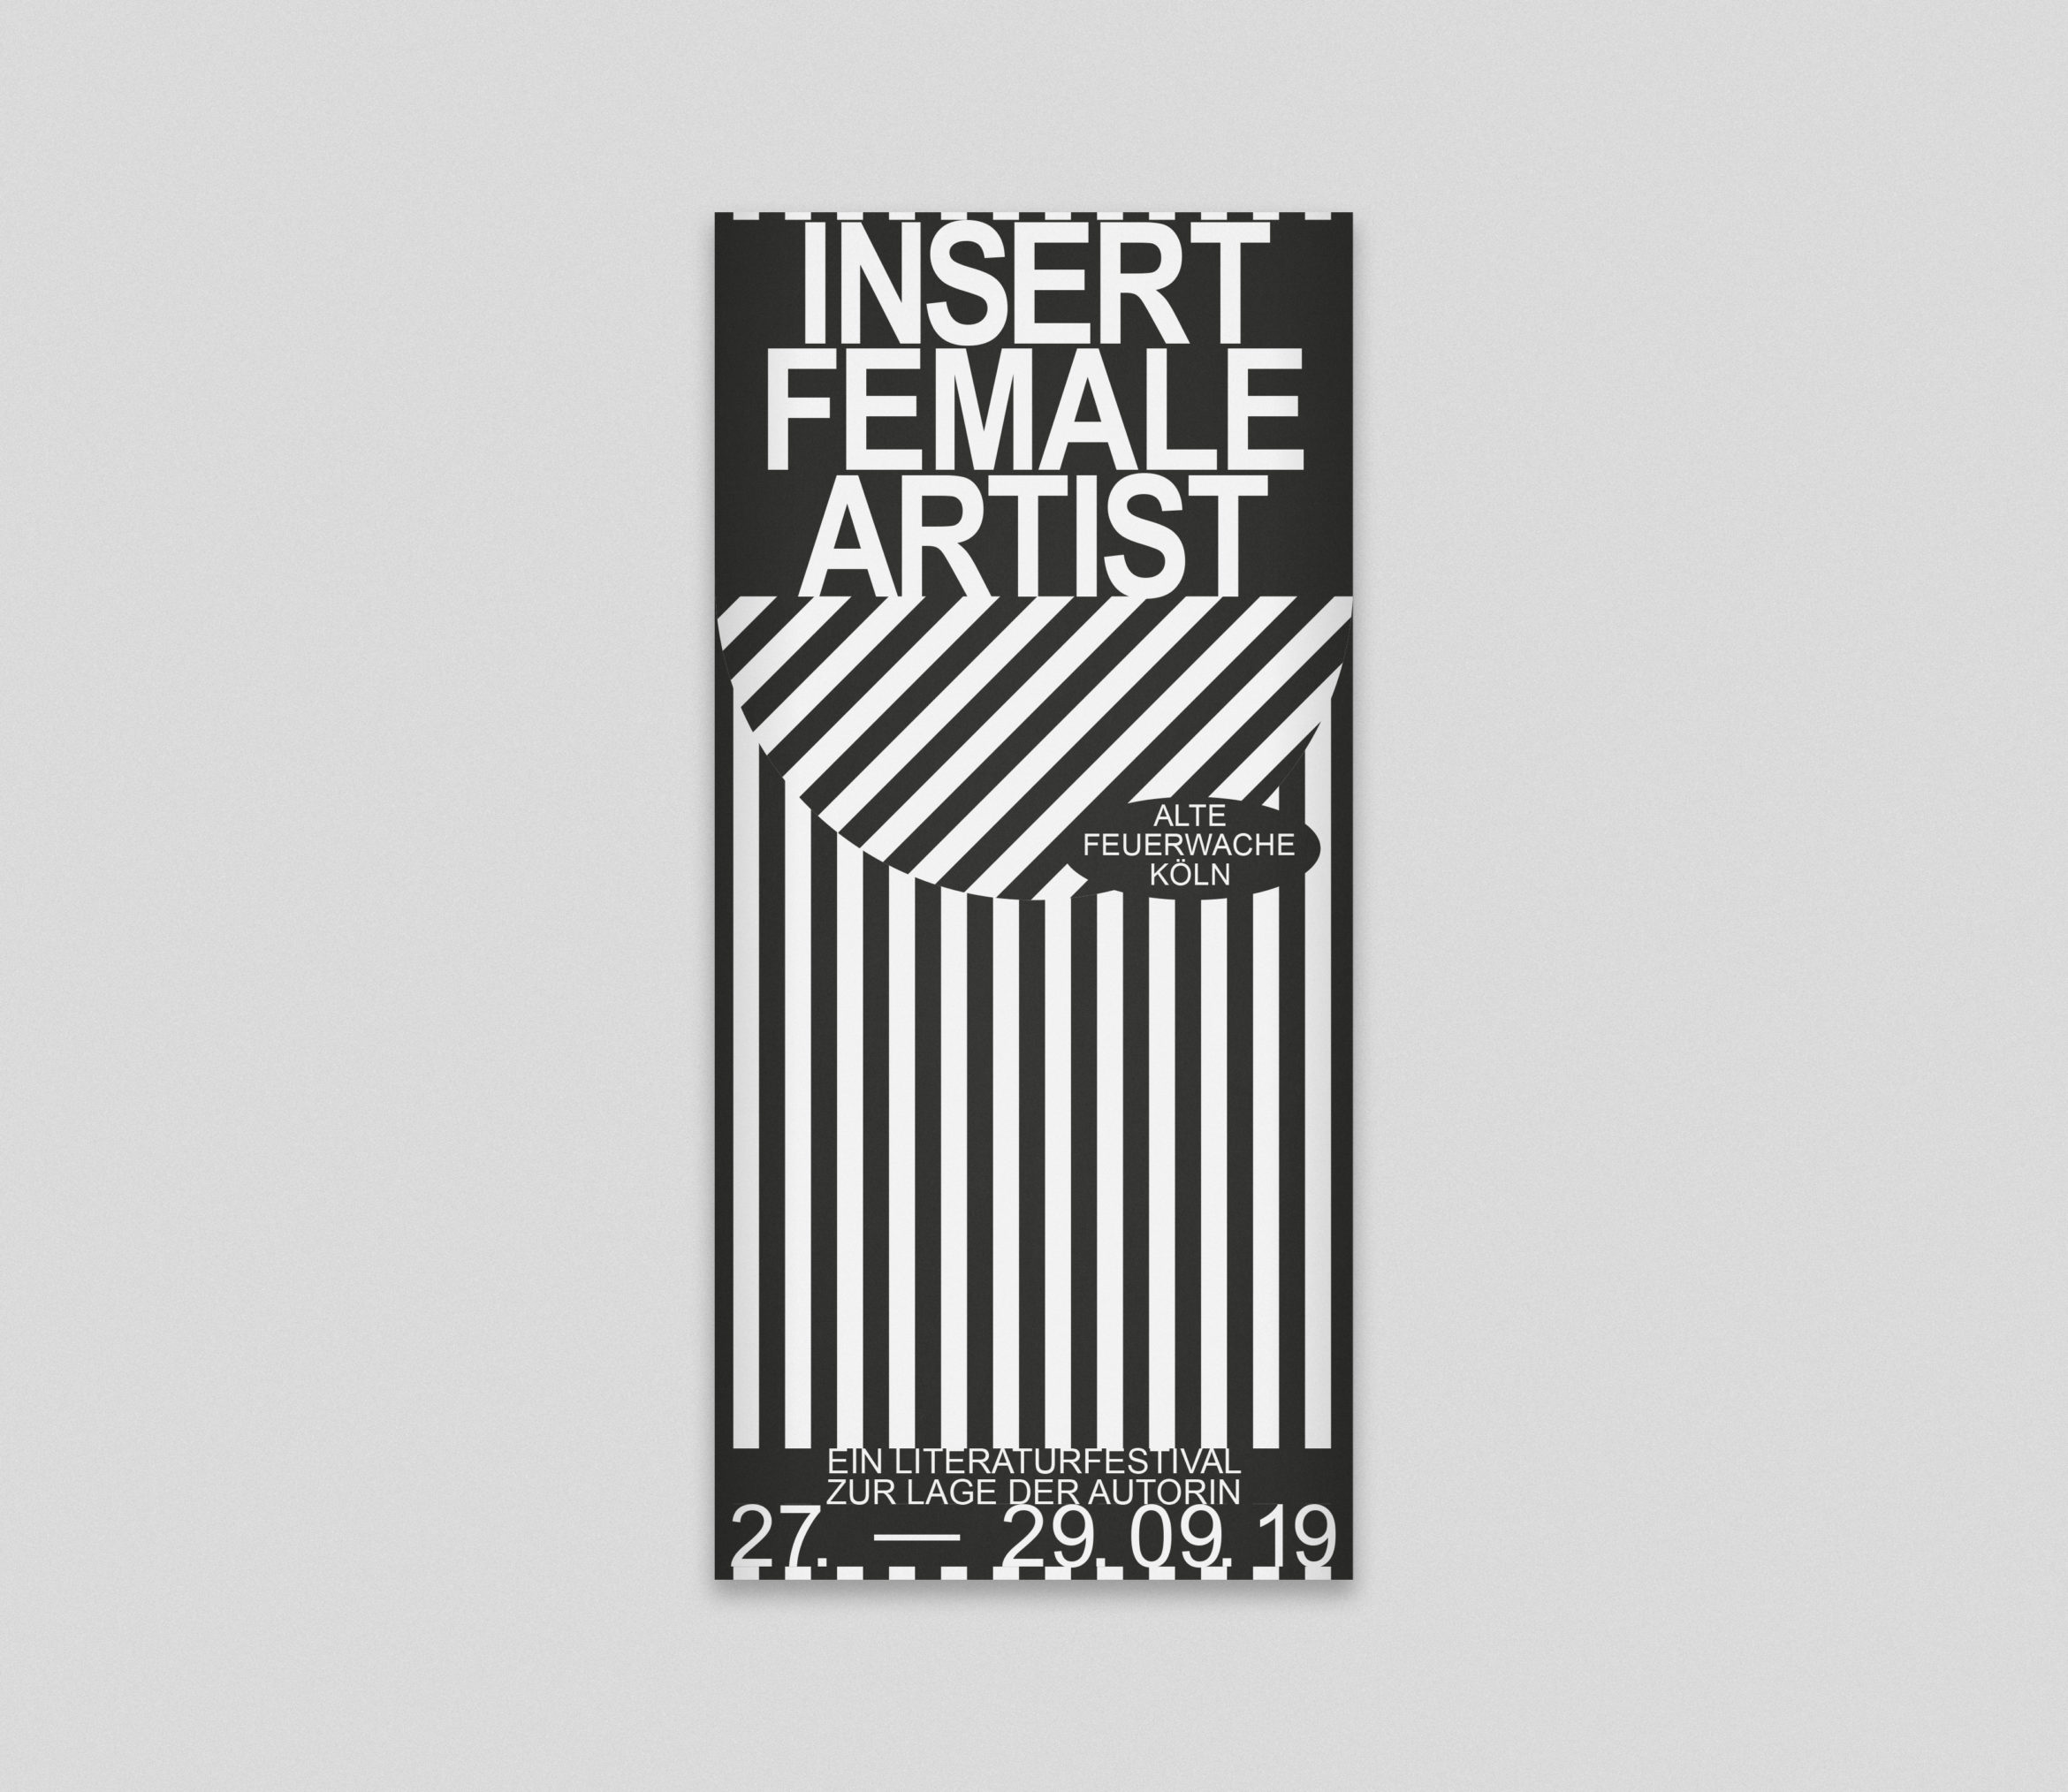 Literaturfestival | Flyer | Insert female Artist